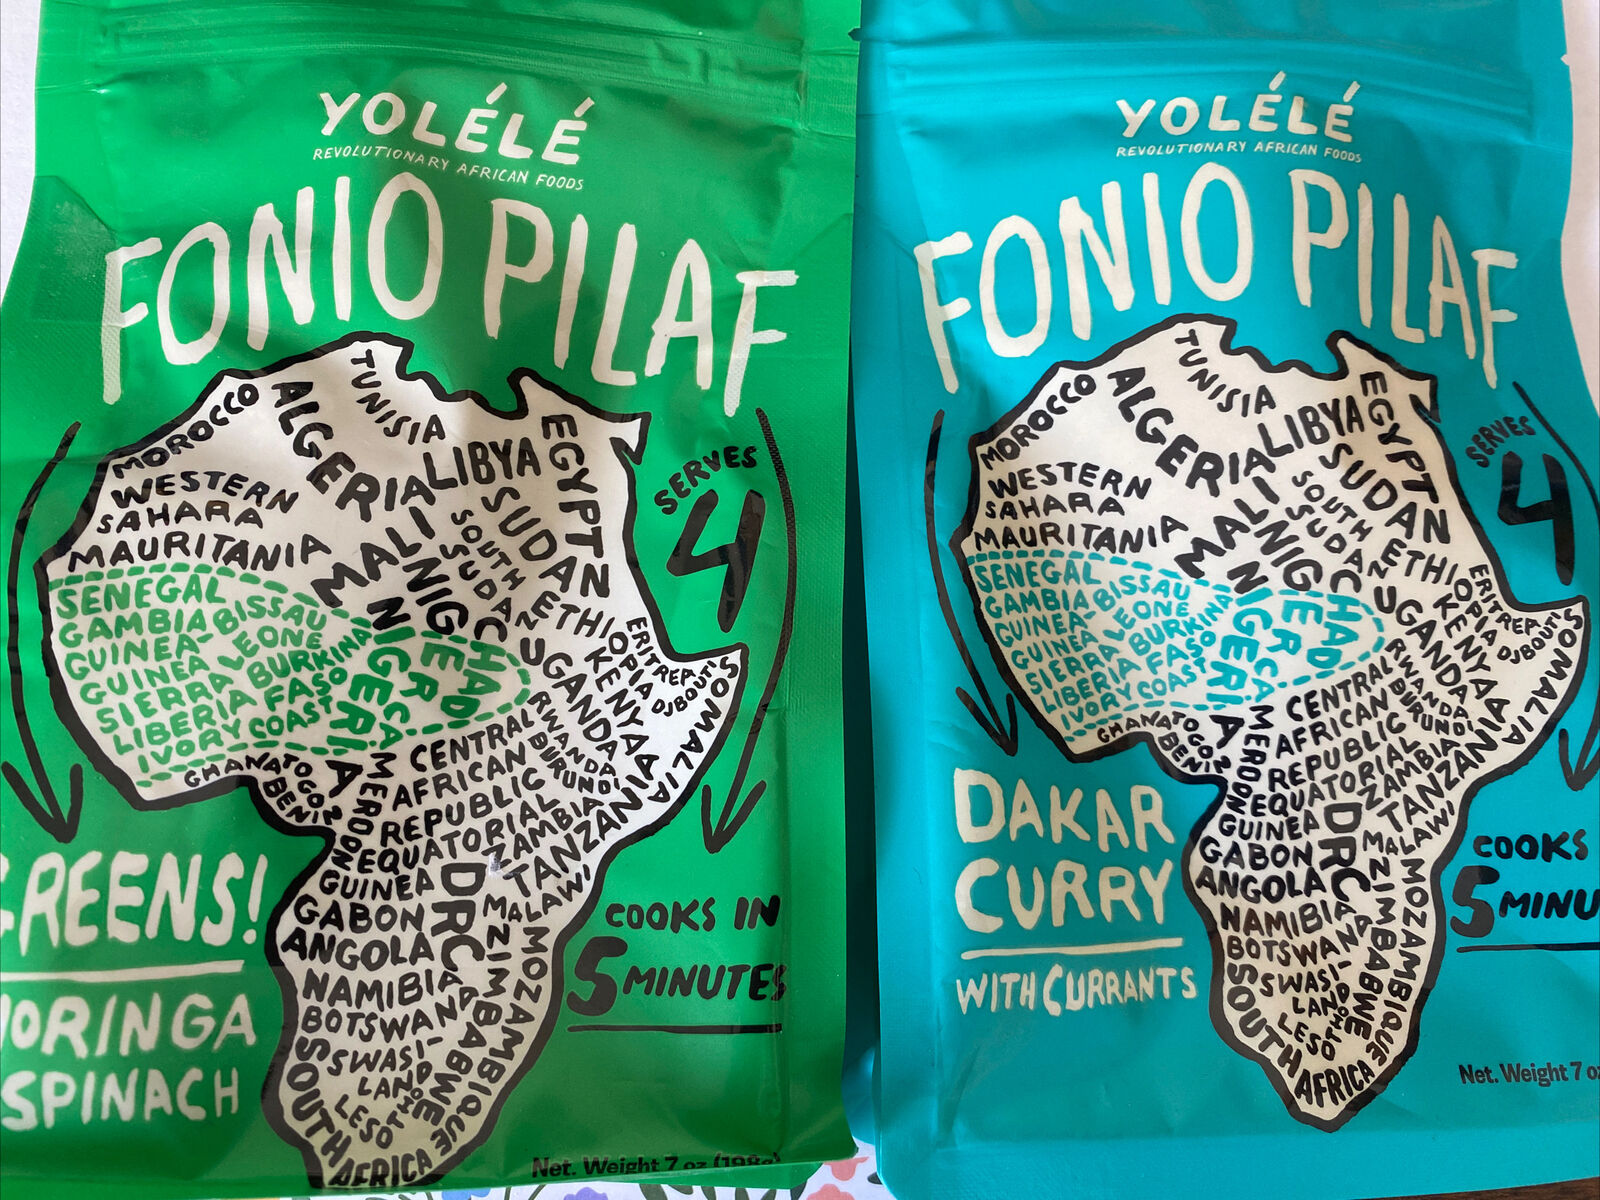 2 Yolele Fonio Pilaf West African Grains Greens Moringa Spinach & Dakar Curry